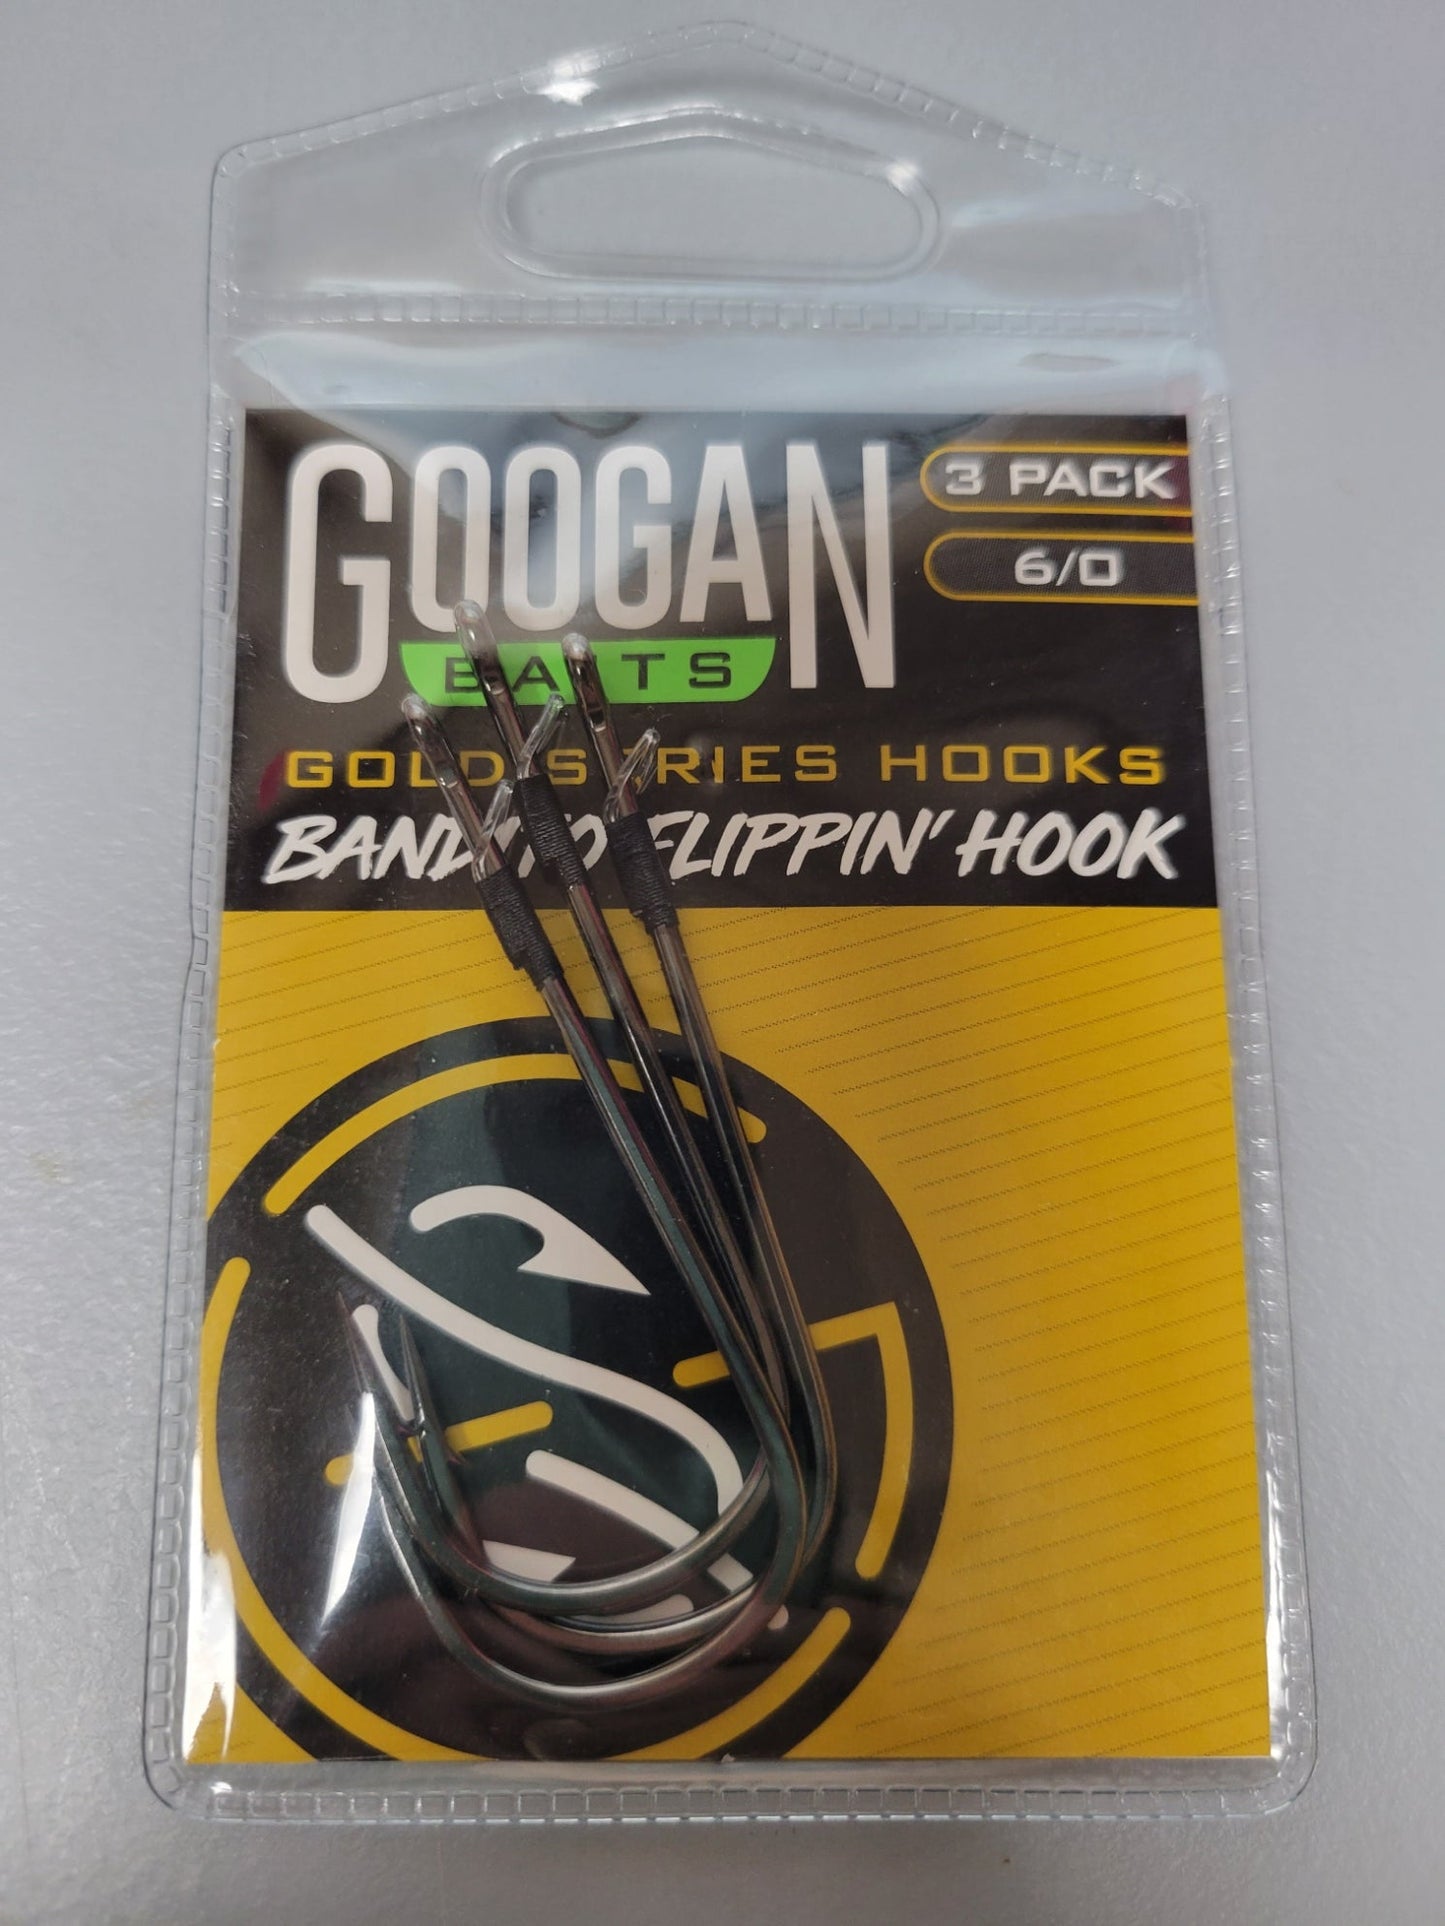 Googan Gold Series Hooks 6/0